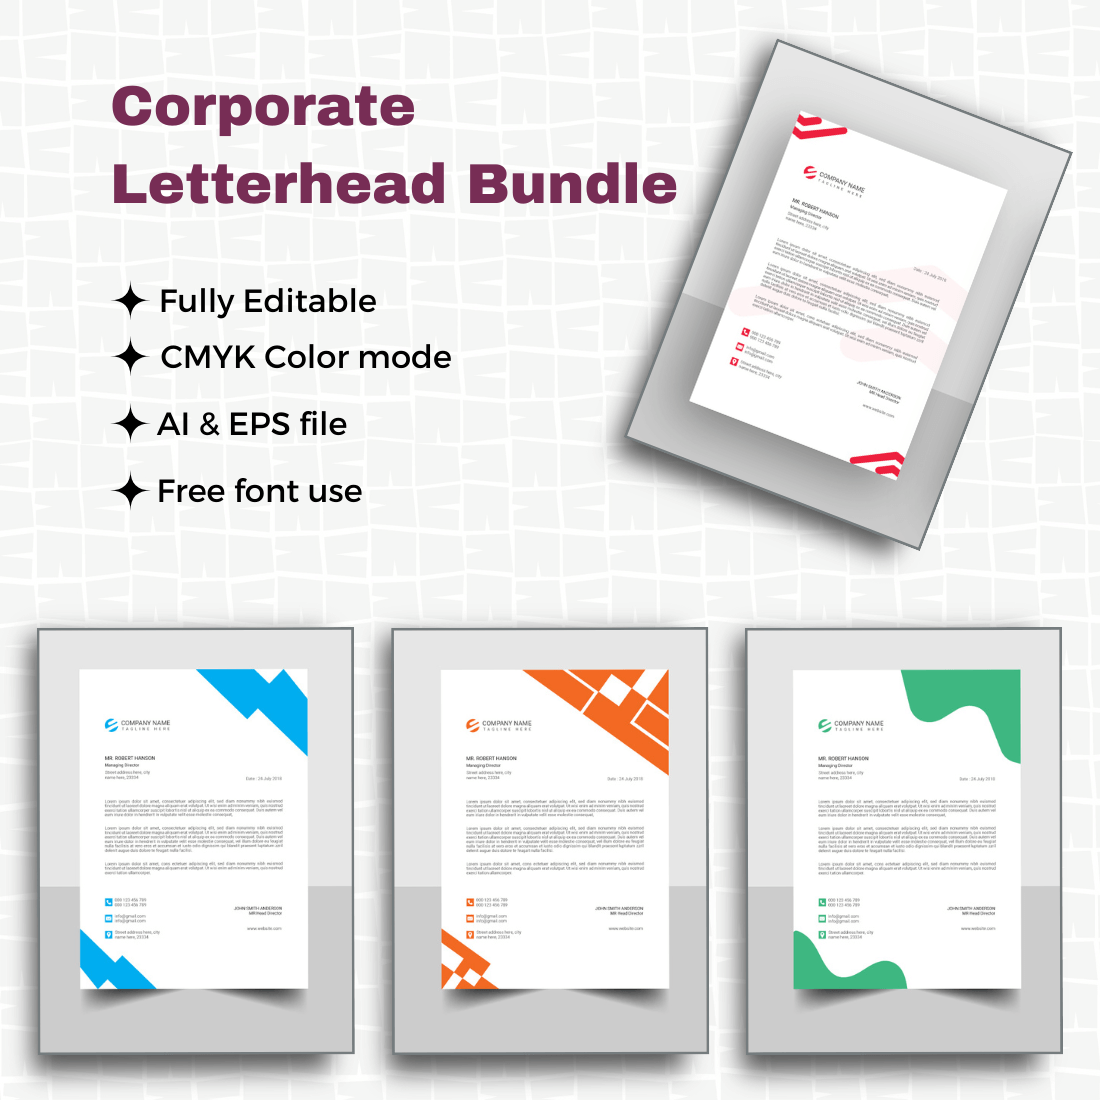 Corporate Letterhead Suite preview image.